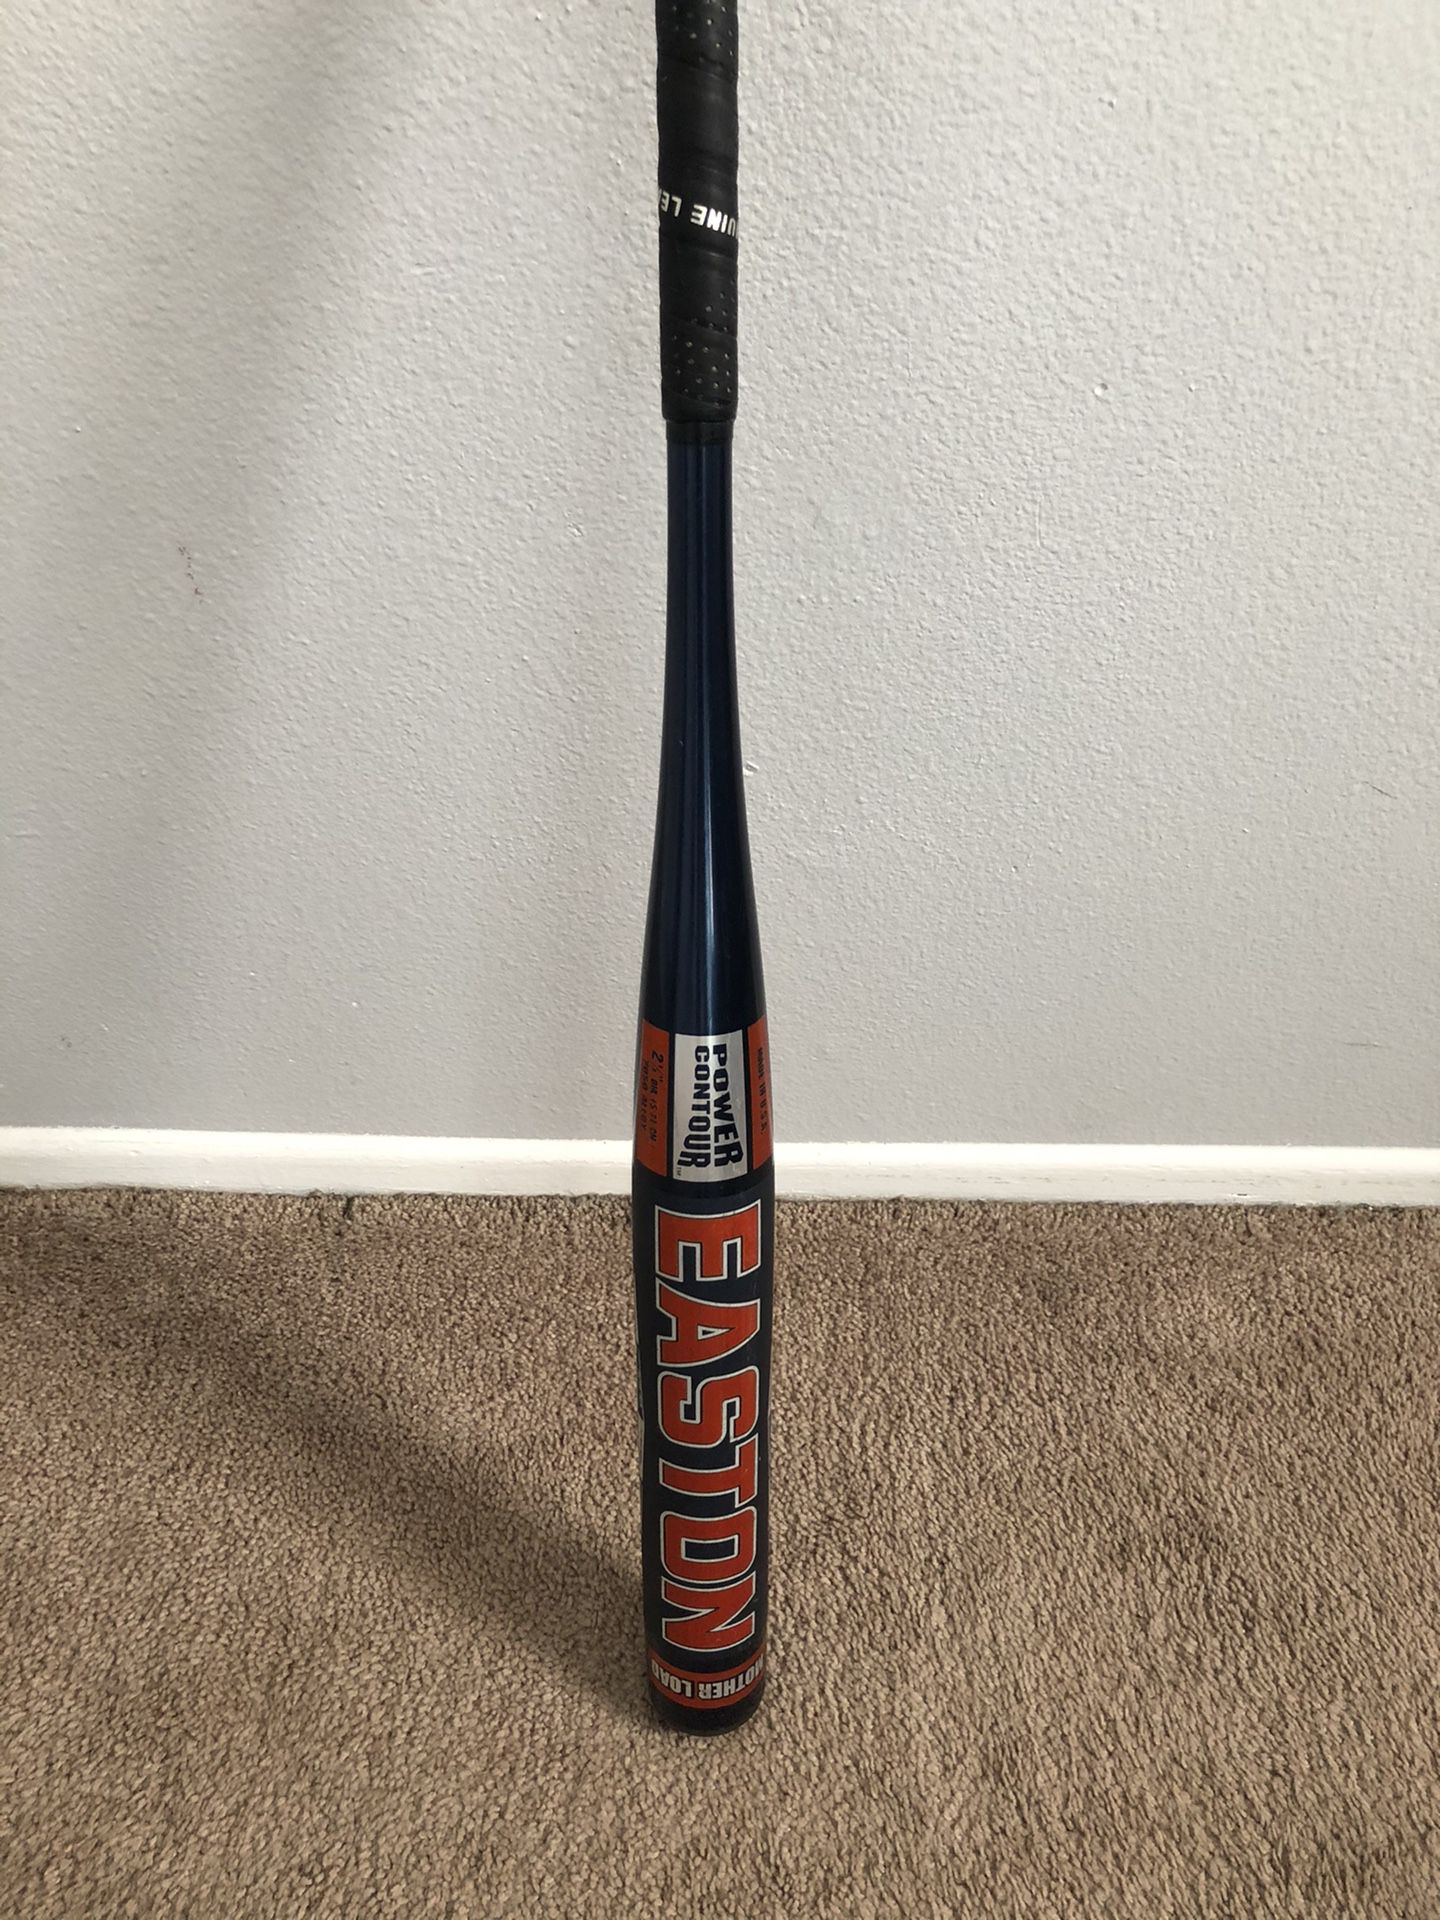 Easton Softball Bat